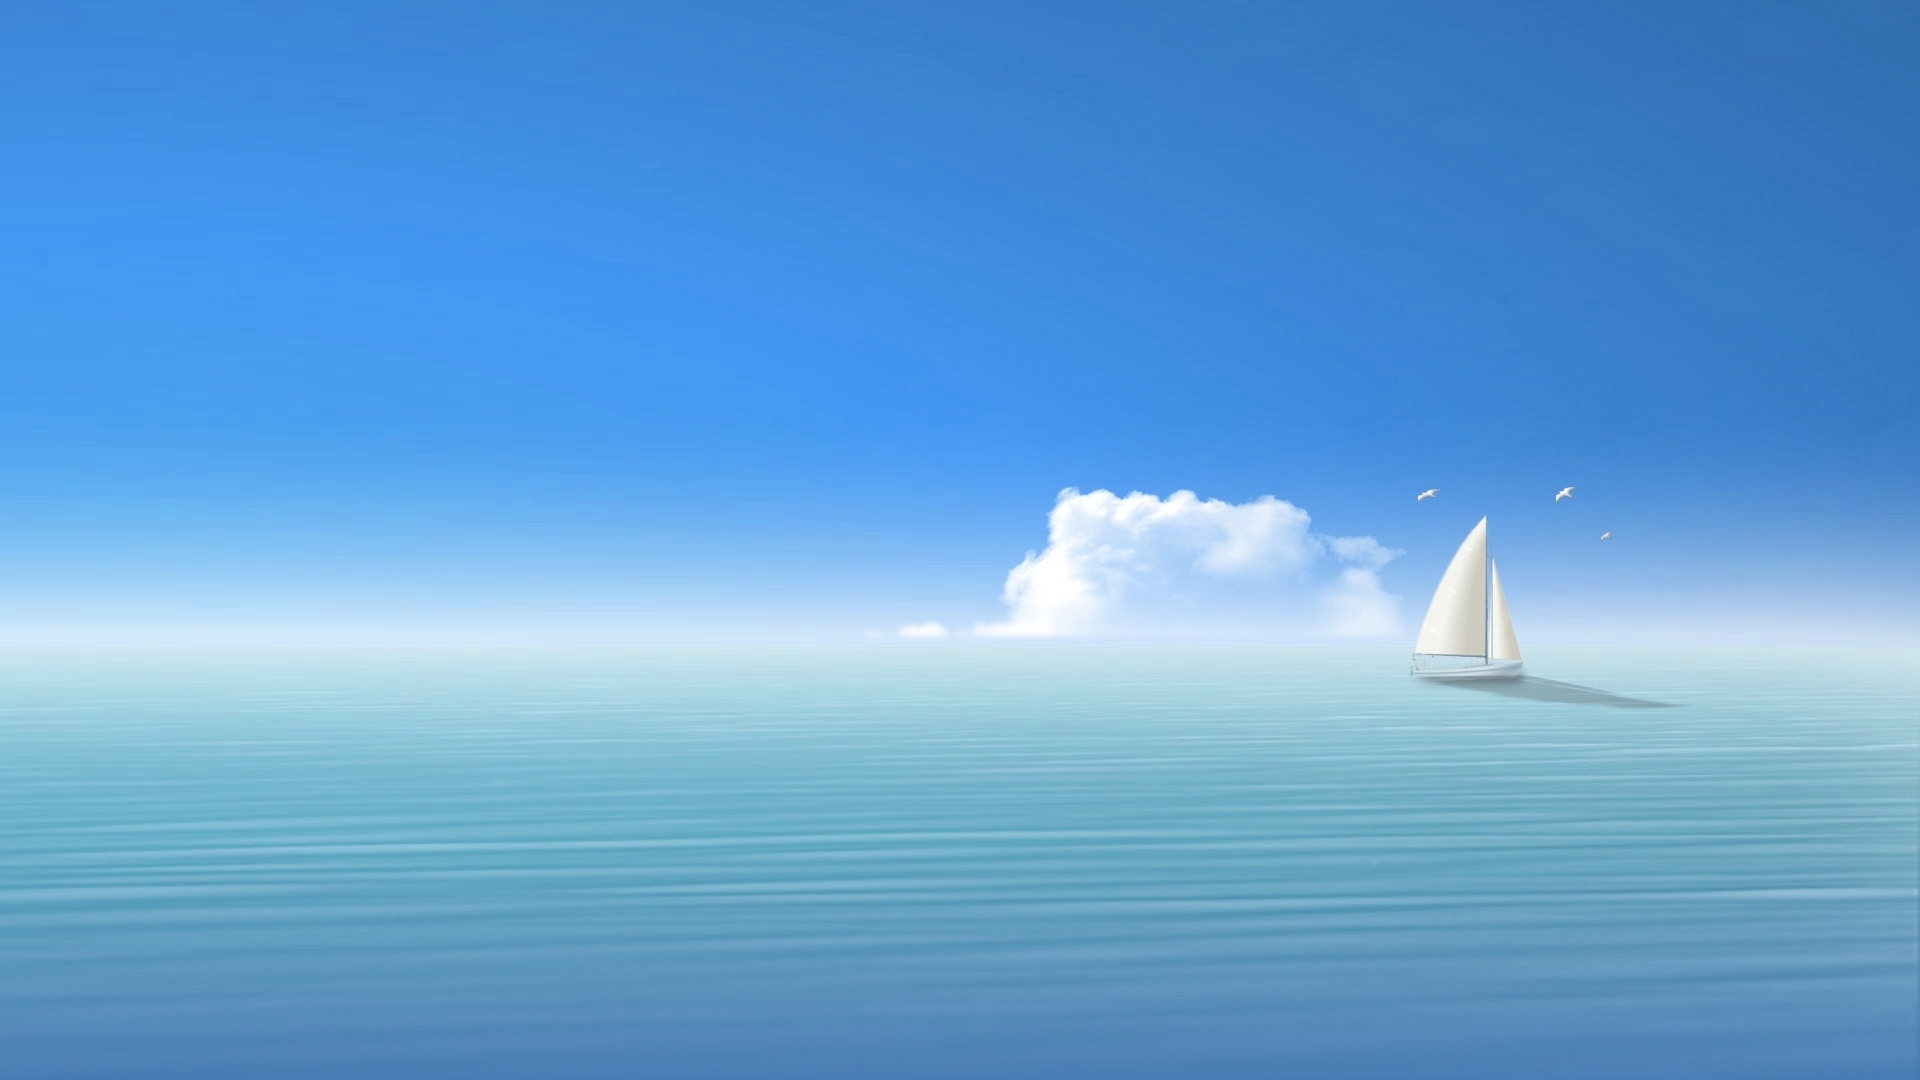 Image: Sea, ocean, cloud, sky, horizon, boat, ship, sails, birds